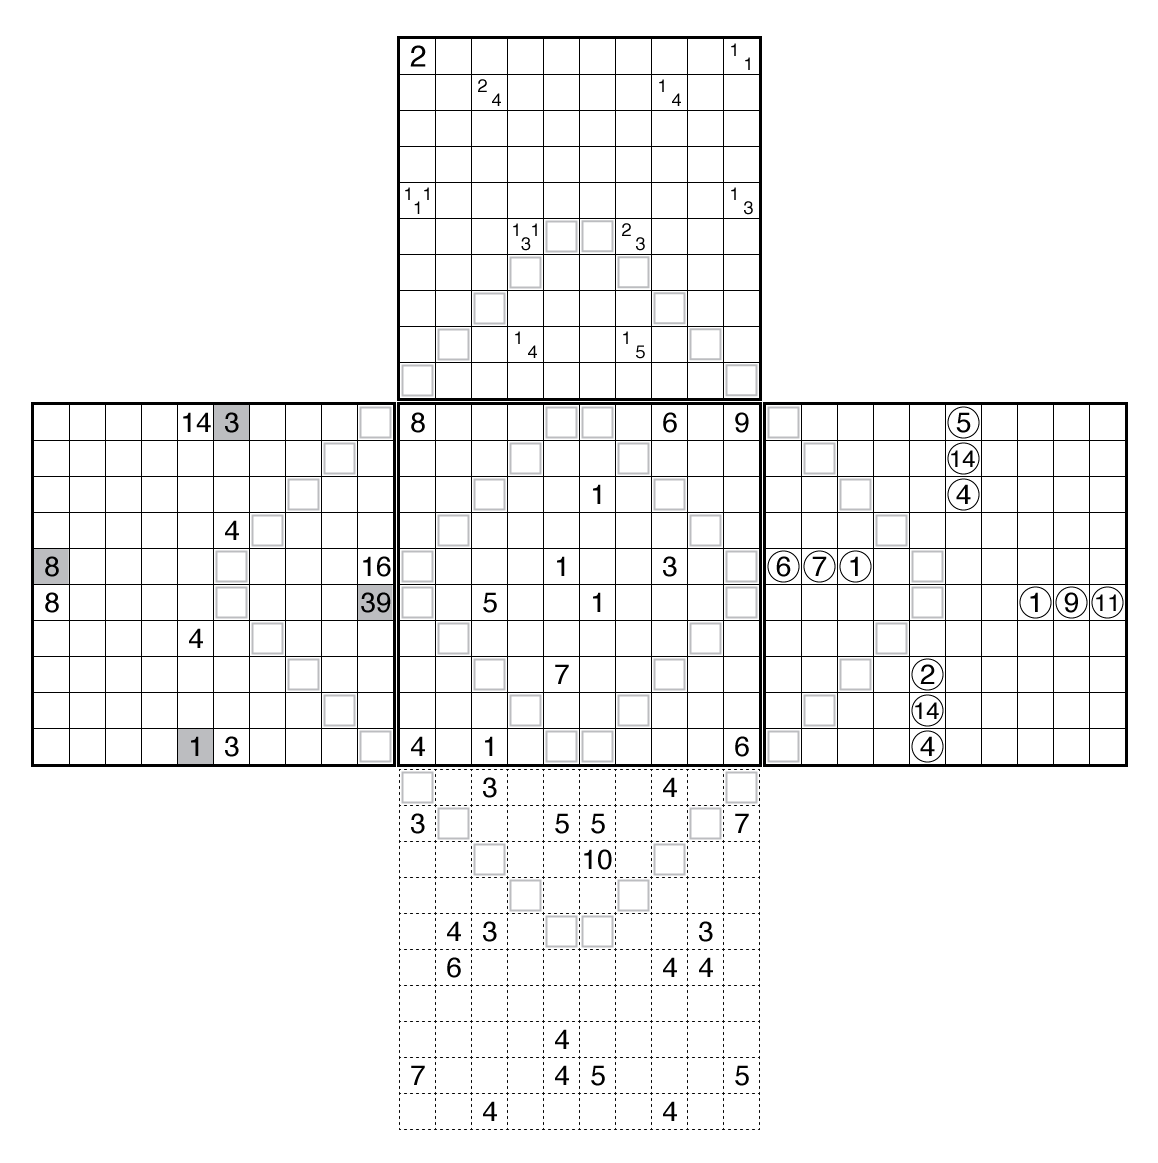 File:4x4 shapes sudoku puzzle.pdf - Wikimedia Commons